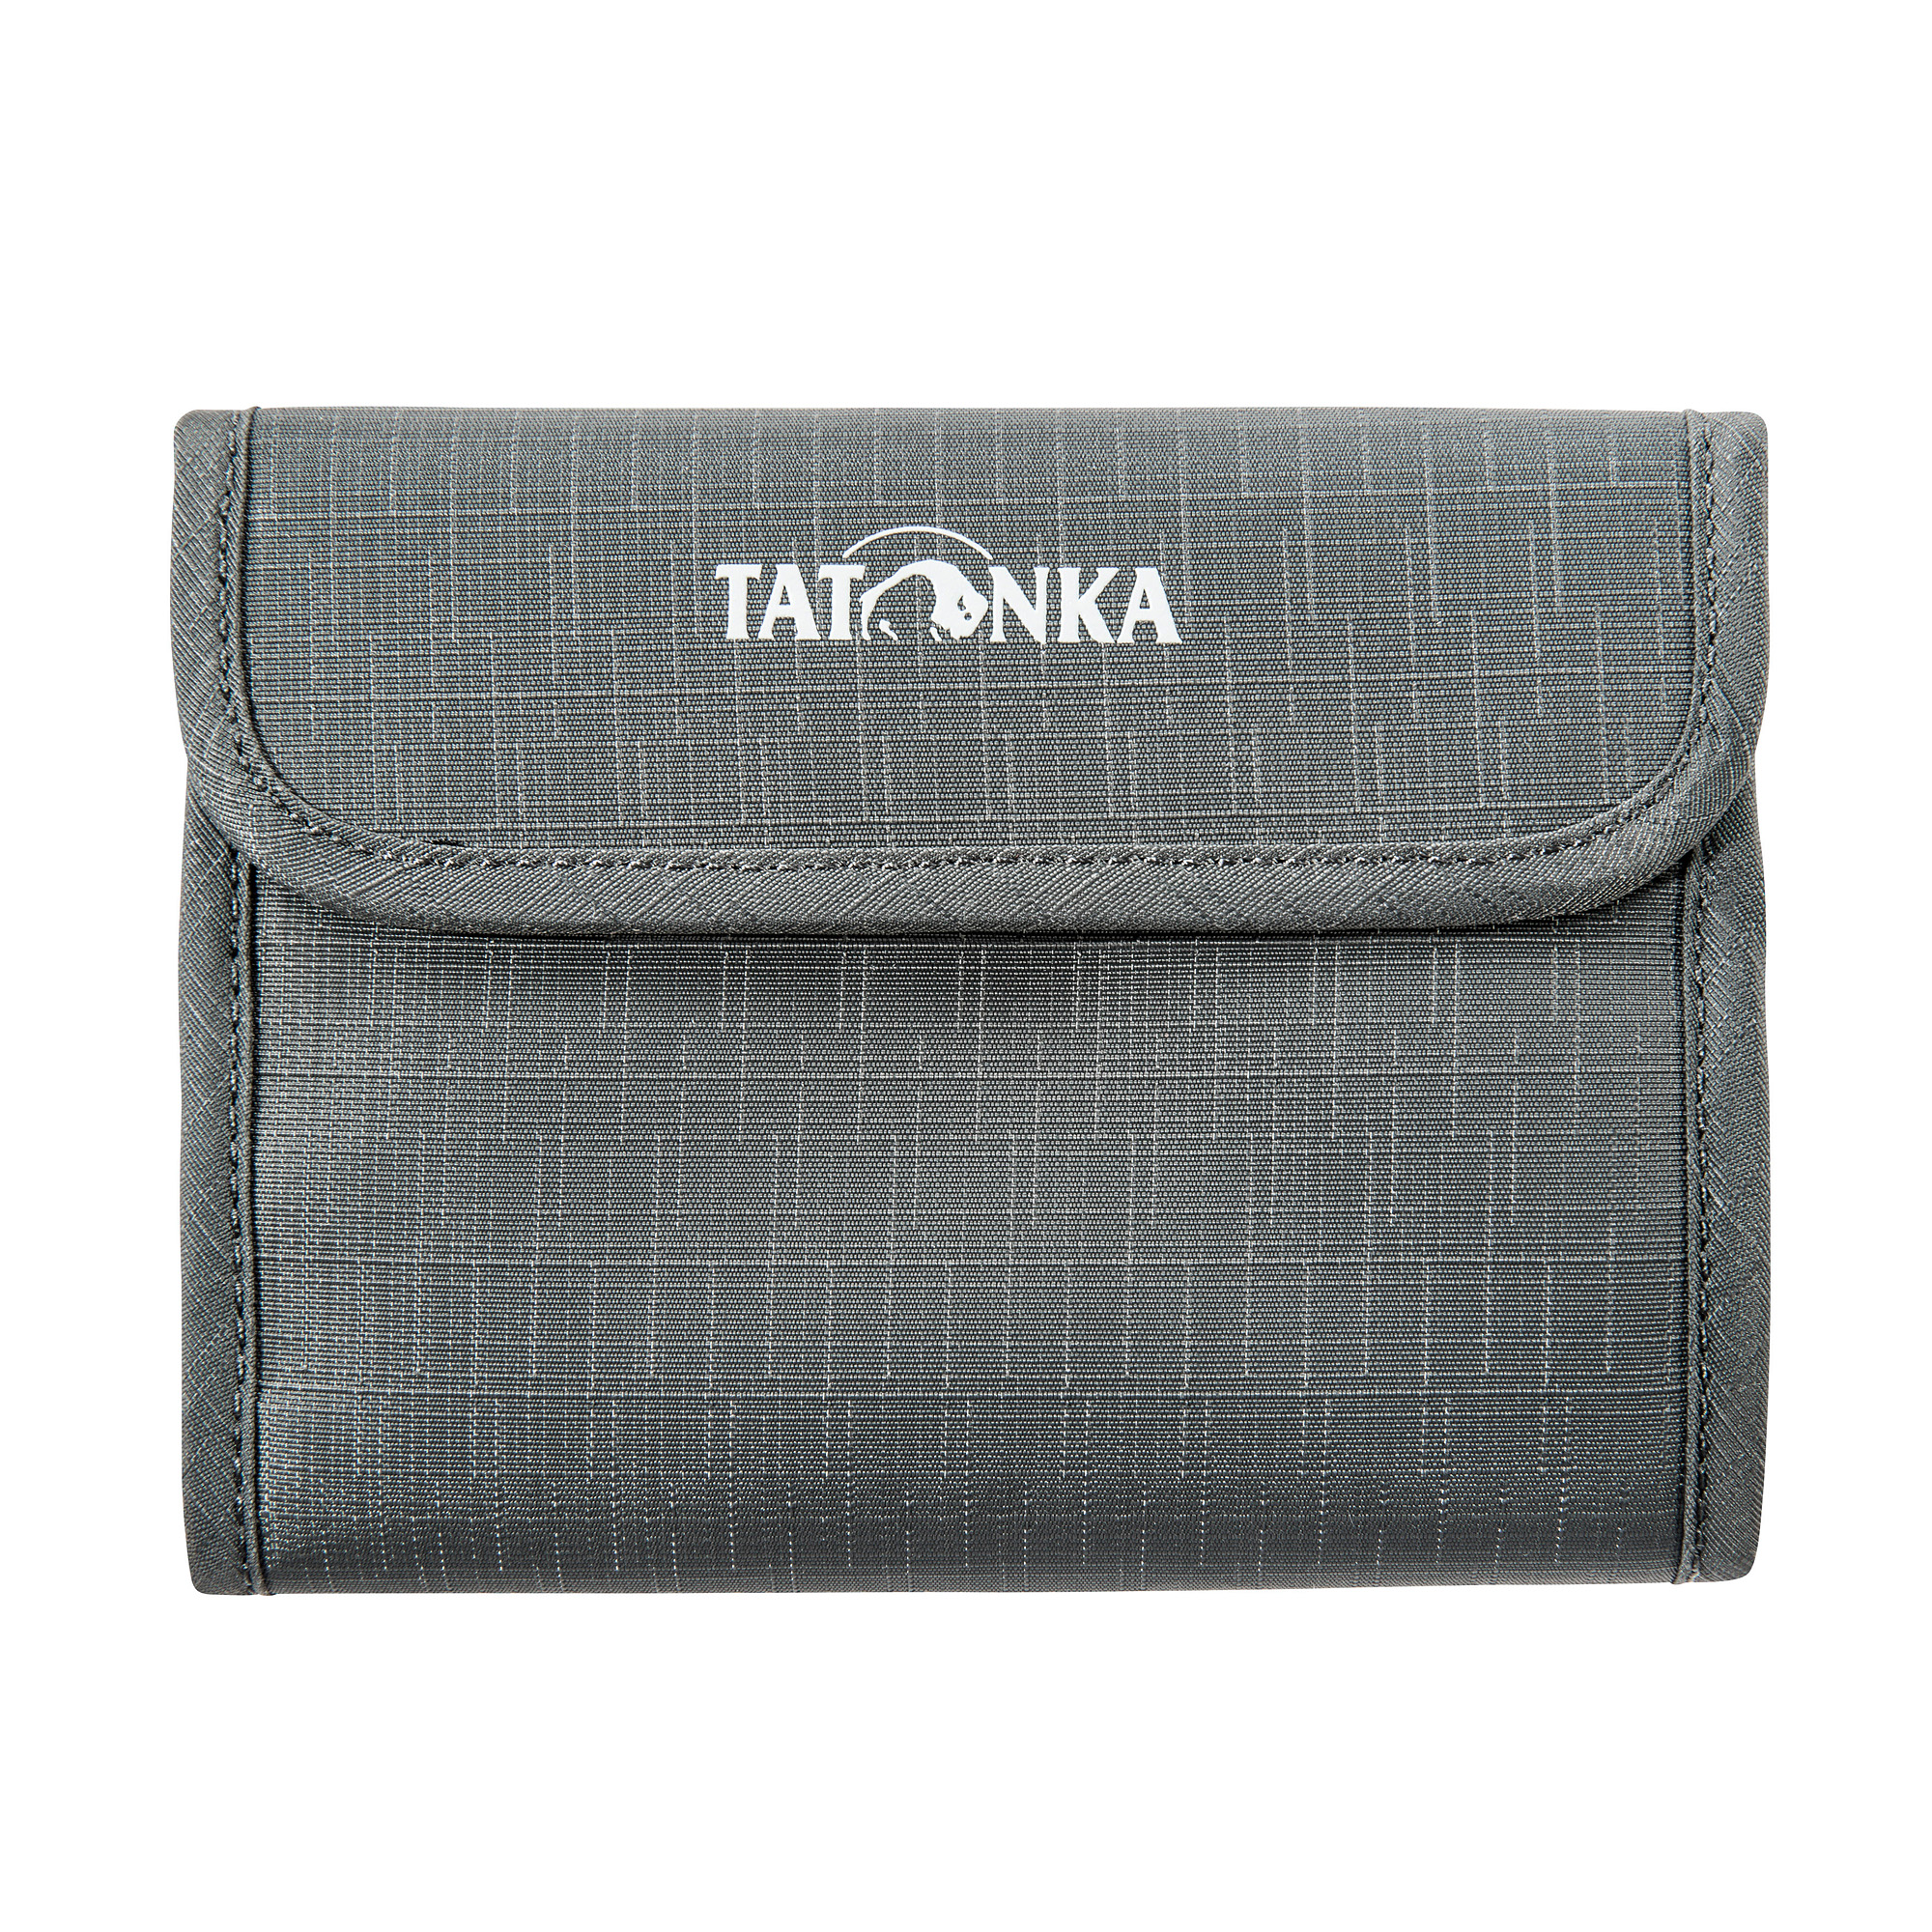 Tatonka Euro Wallet titan grey grau Geldbeutel 4013236256130